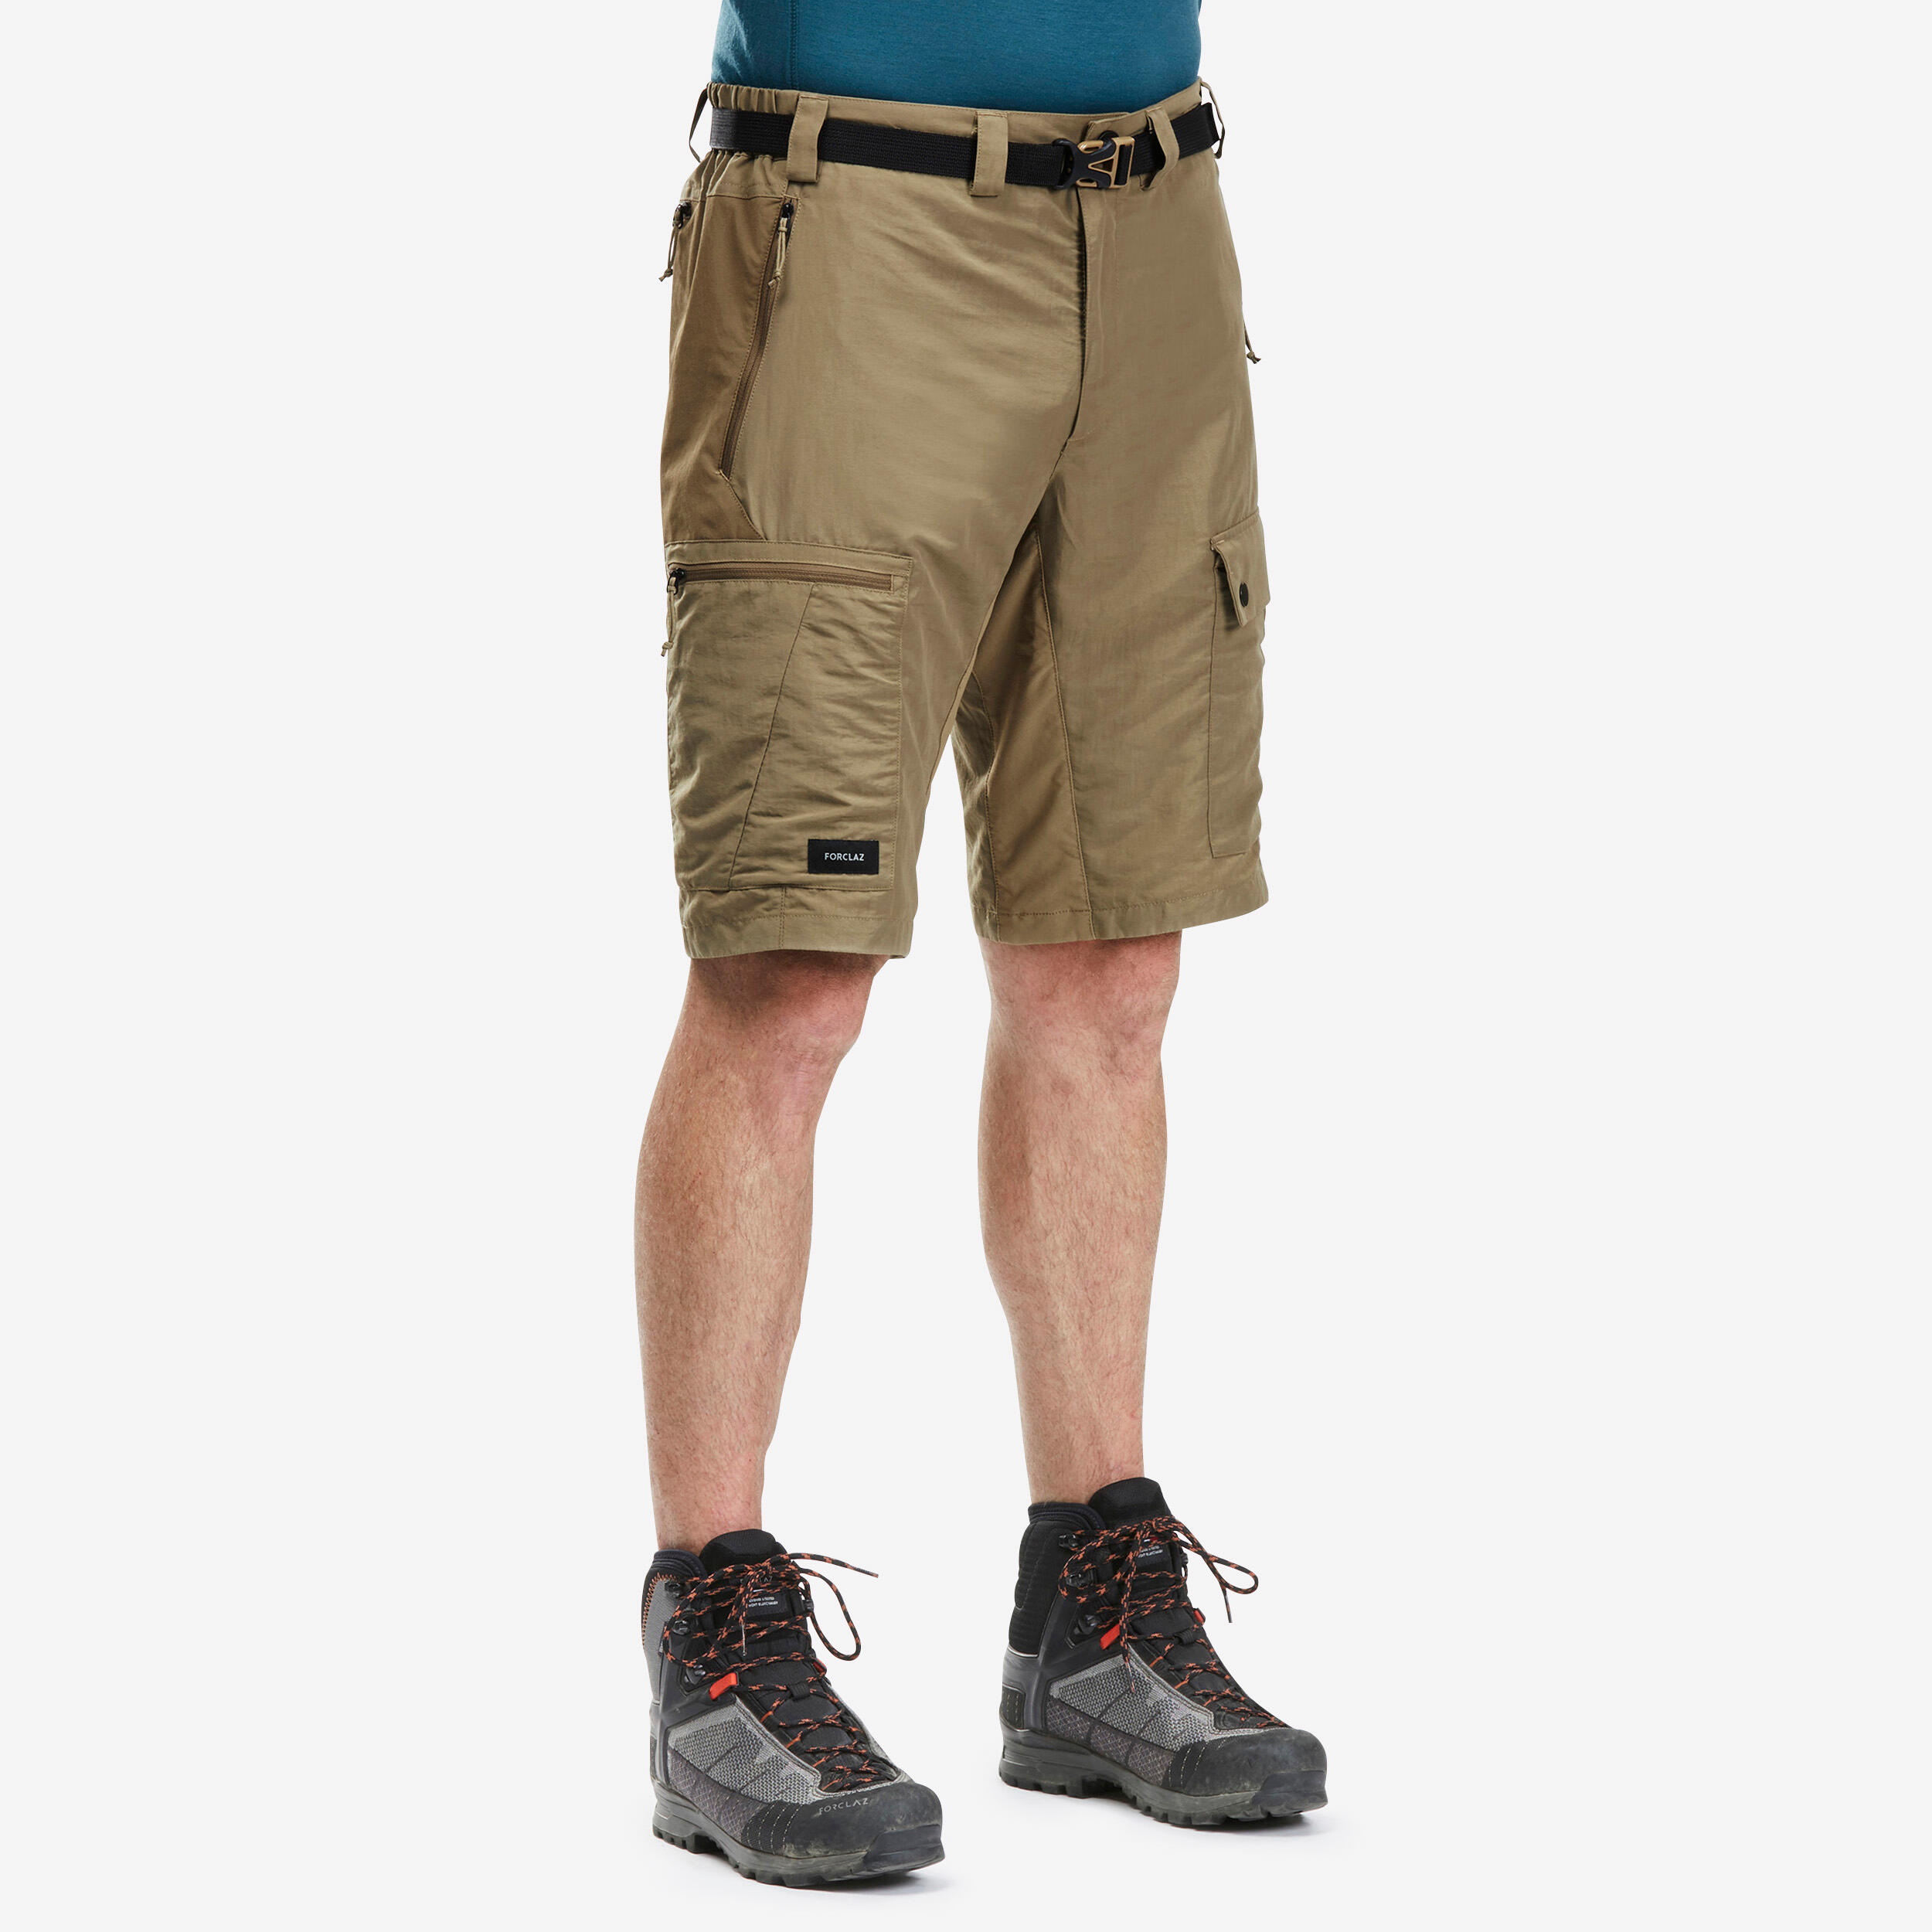 FORCLAZ Men's Trekking Shorts - MT500